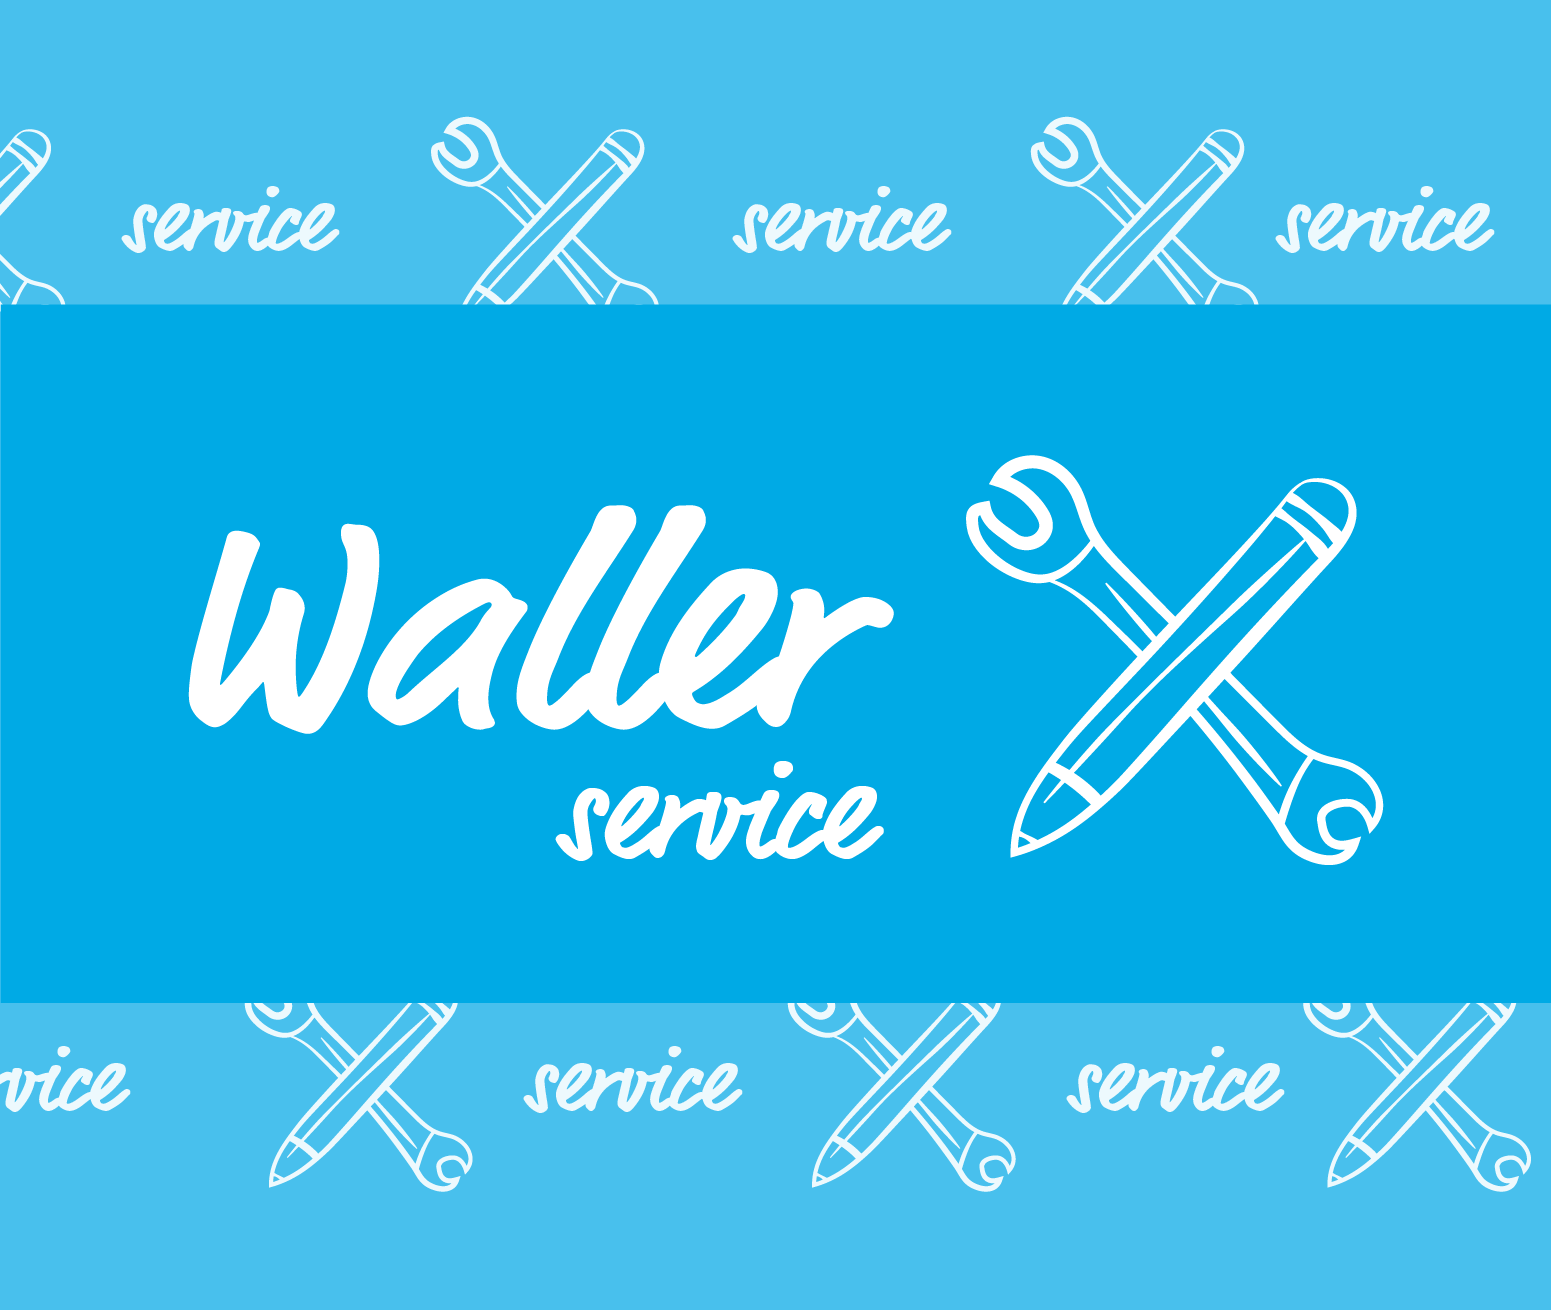 Waller Service